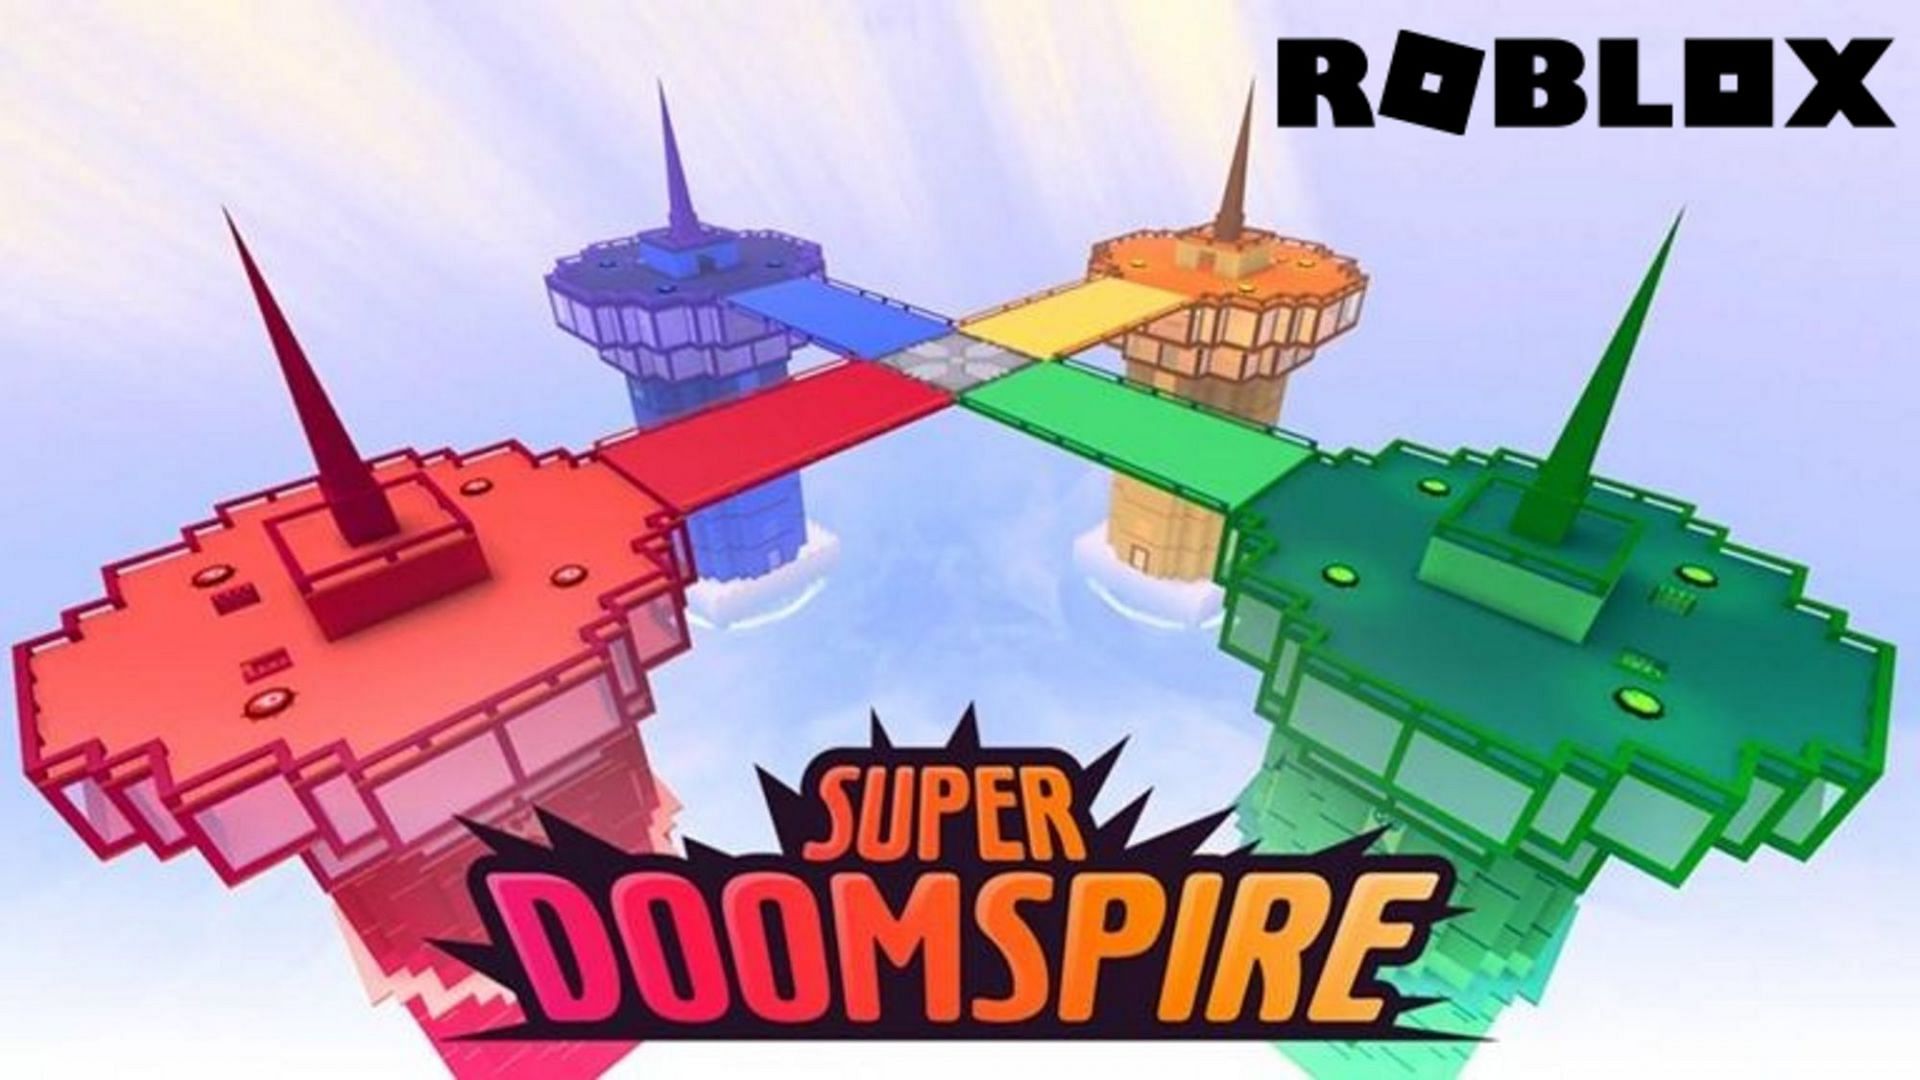 Roblox Super Doomspire codes to redeem free rewards (Image via Roblox)